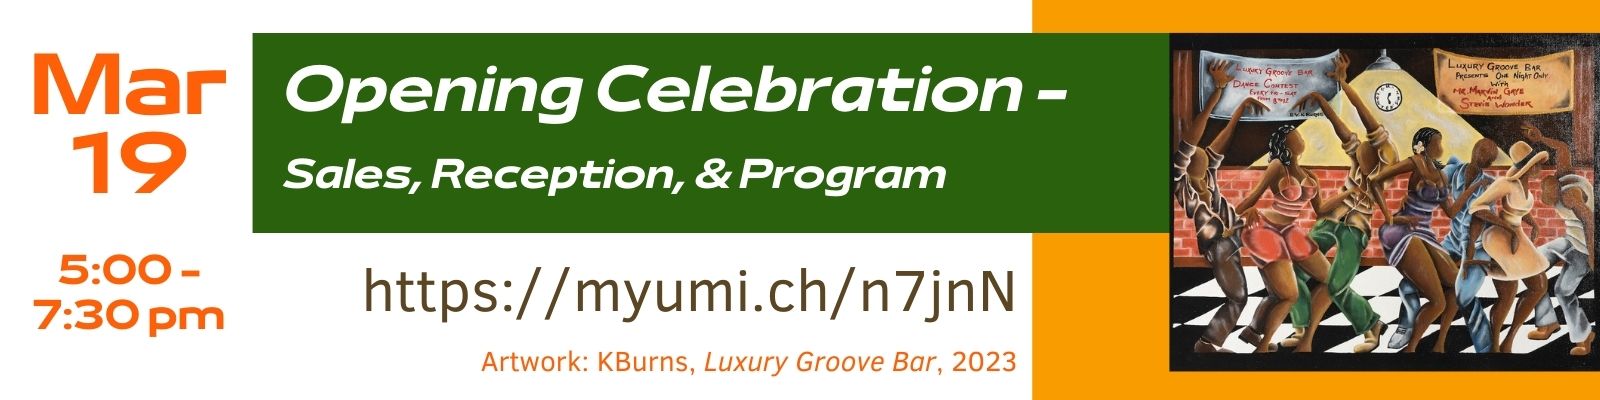 link to Opening Celebration Event website